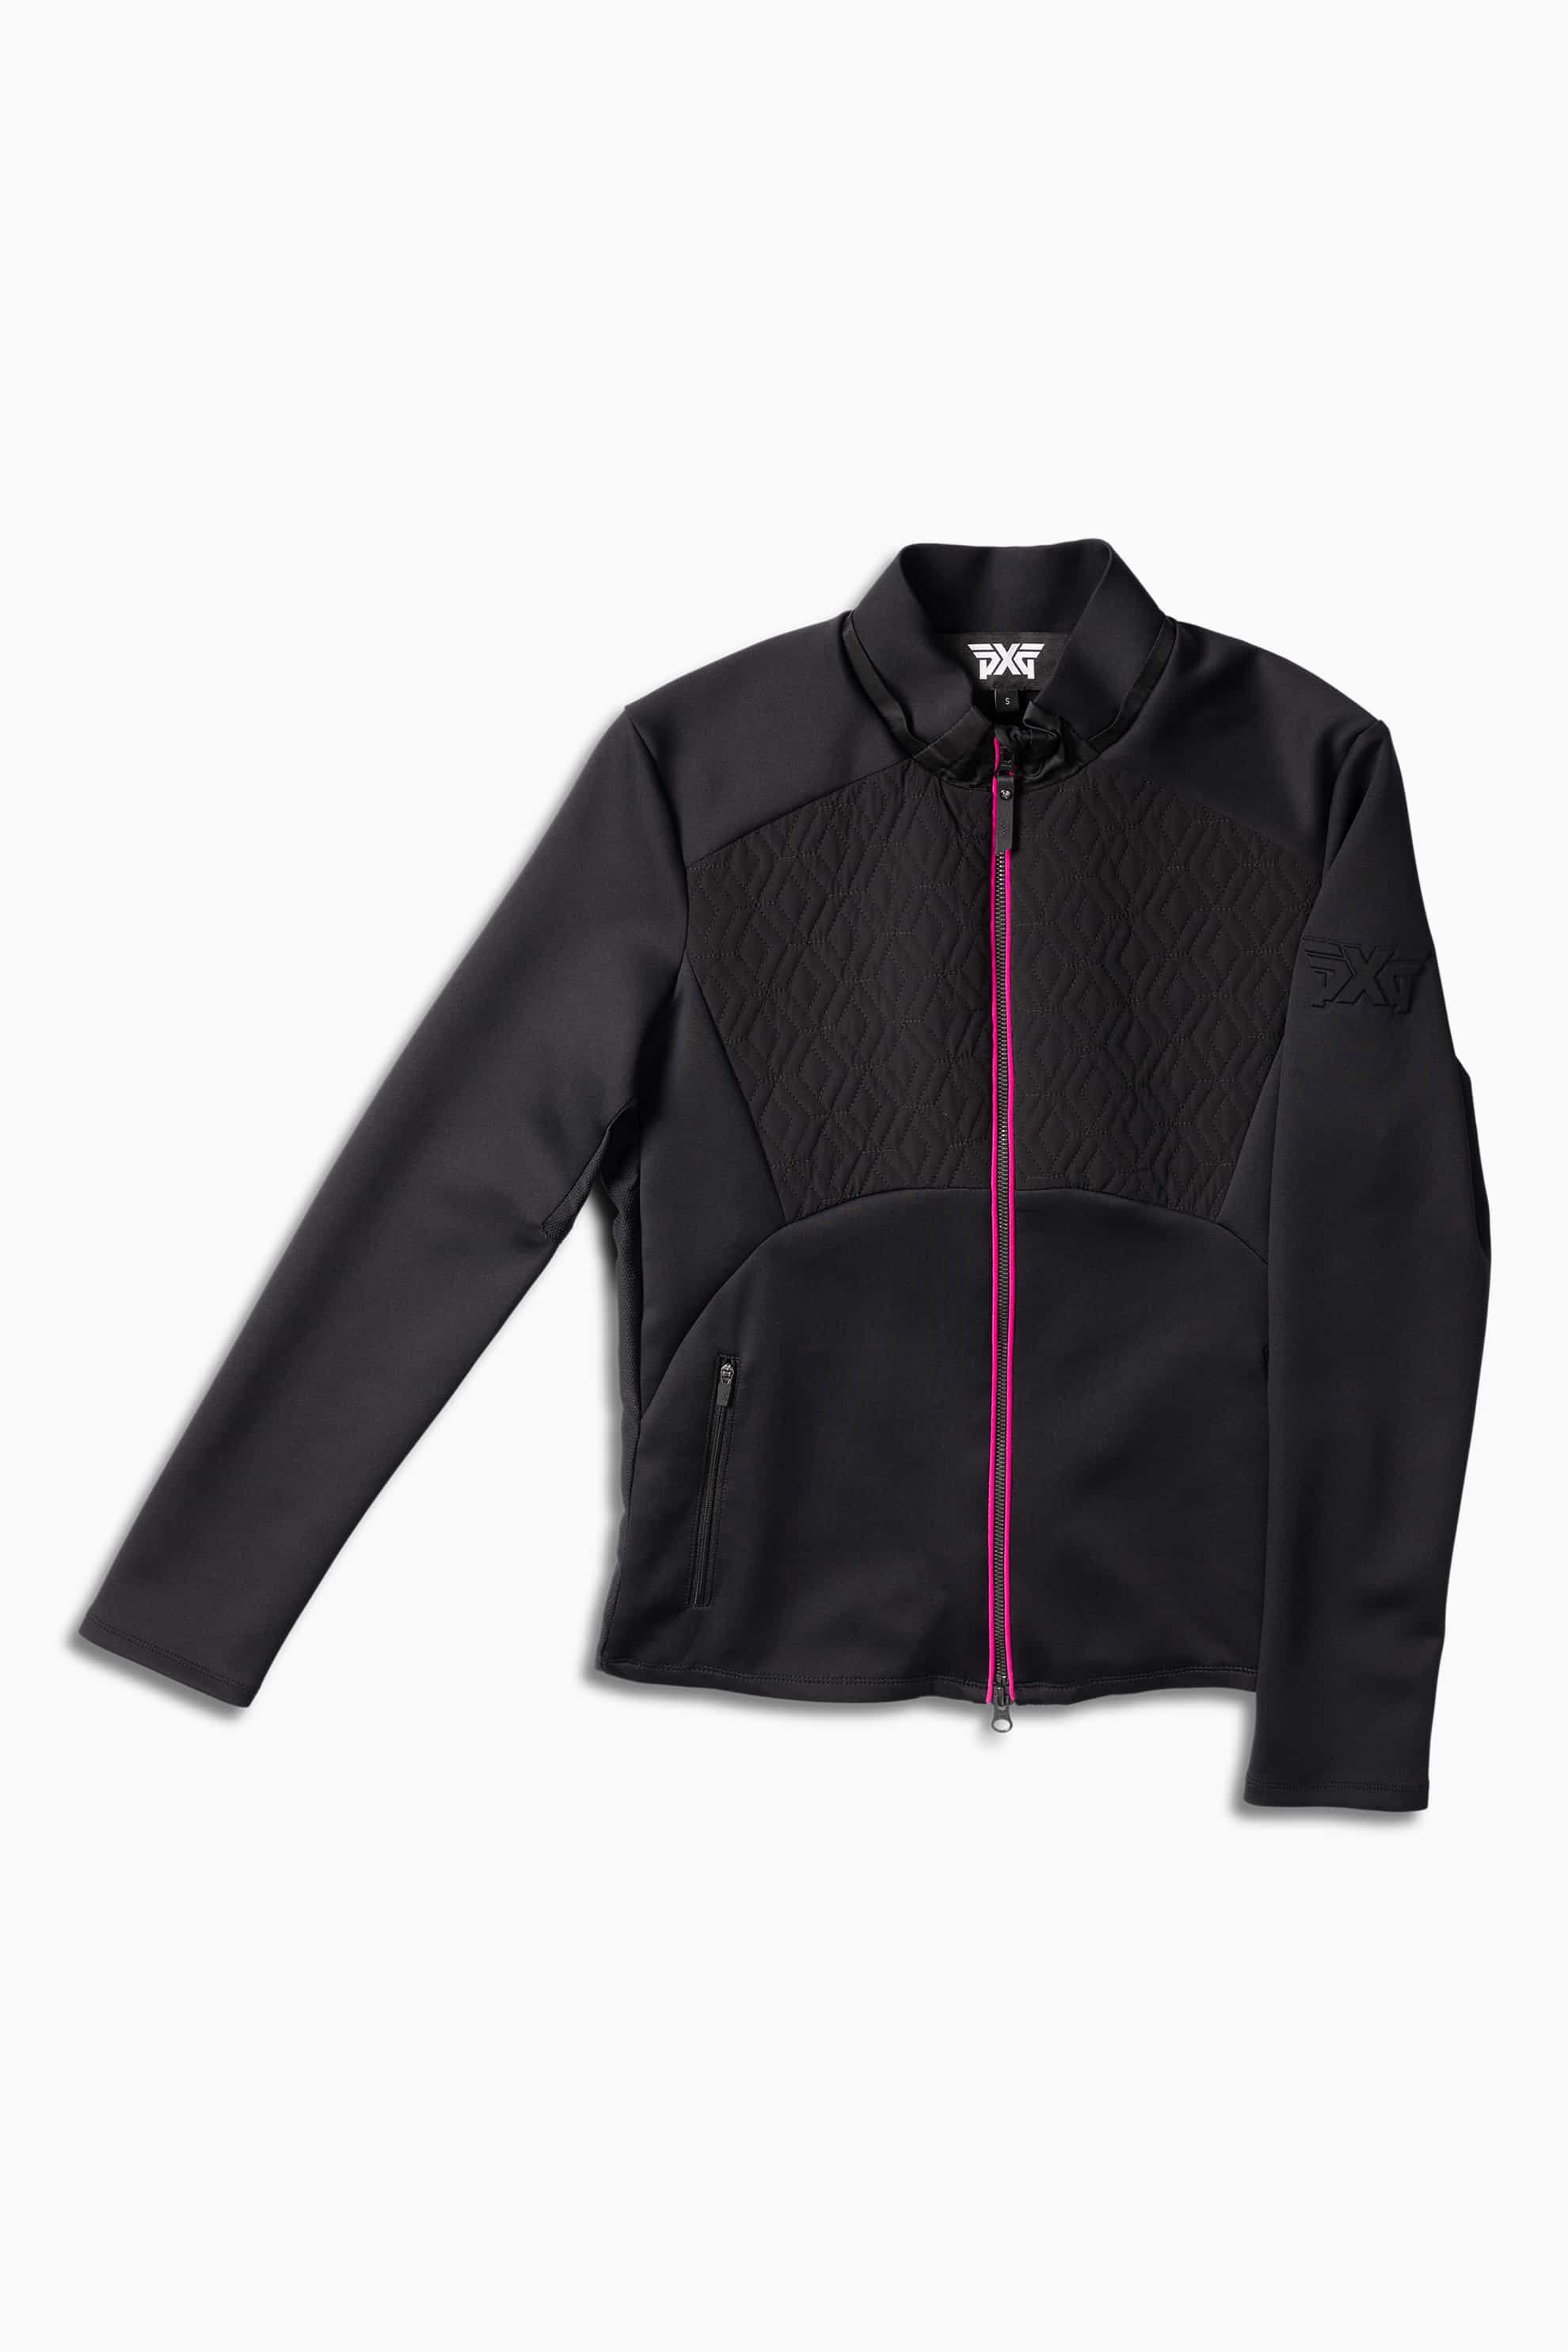 Shop Women's Golf アウター - Vests, Jackets and Coats | PXG JP